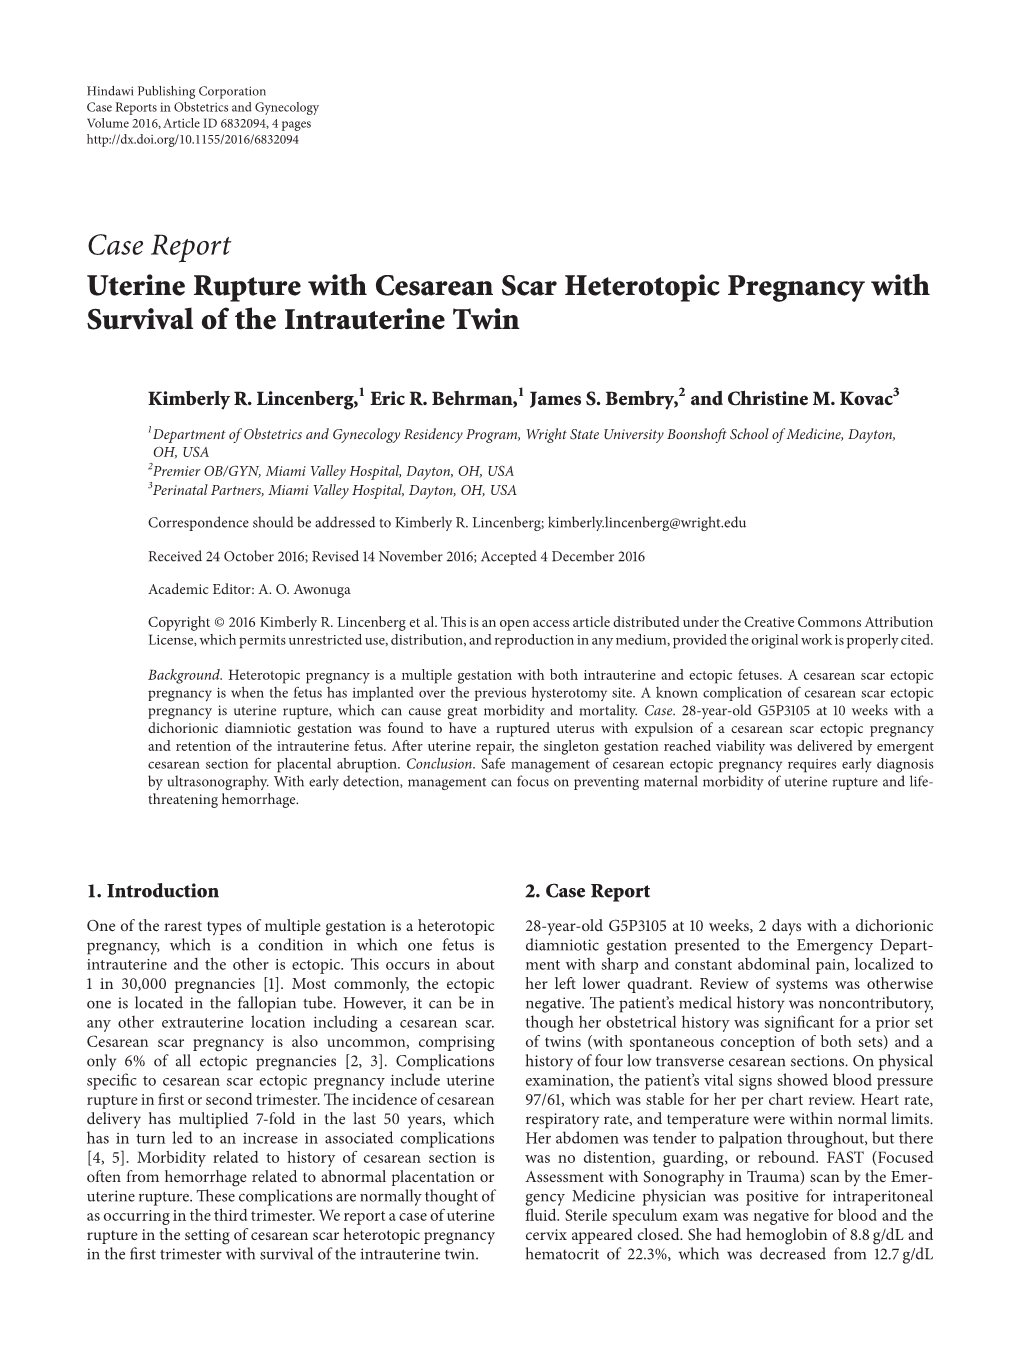 Case Report Uterine Rupture with Cesarean Scar Heterotopic Pregnancy with Survival of the Intrauterine Twin